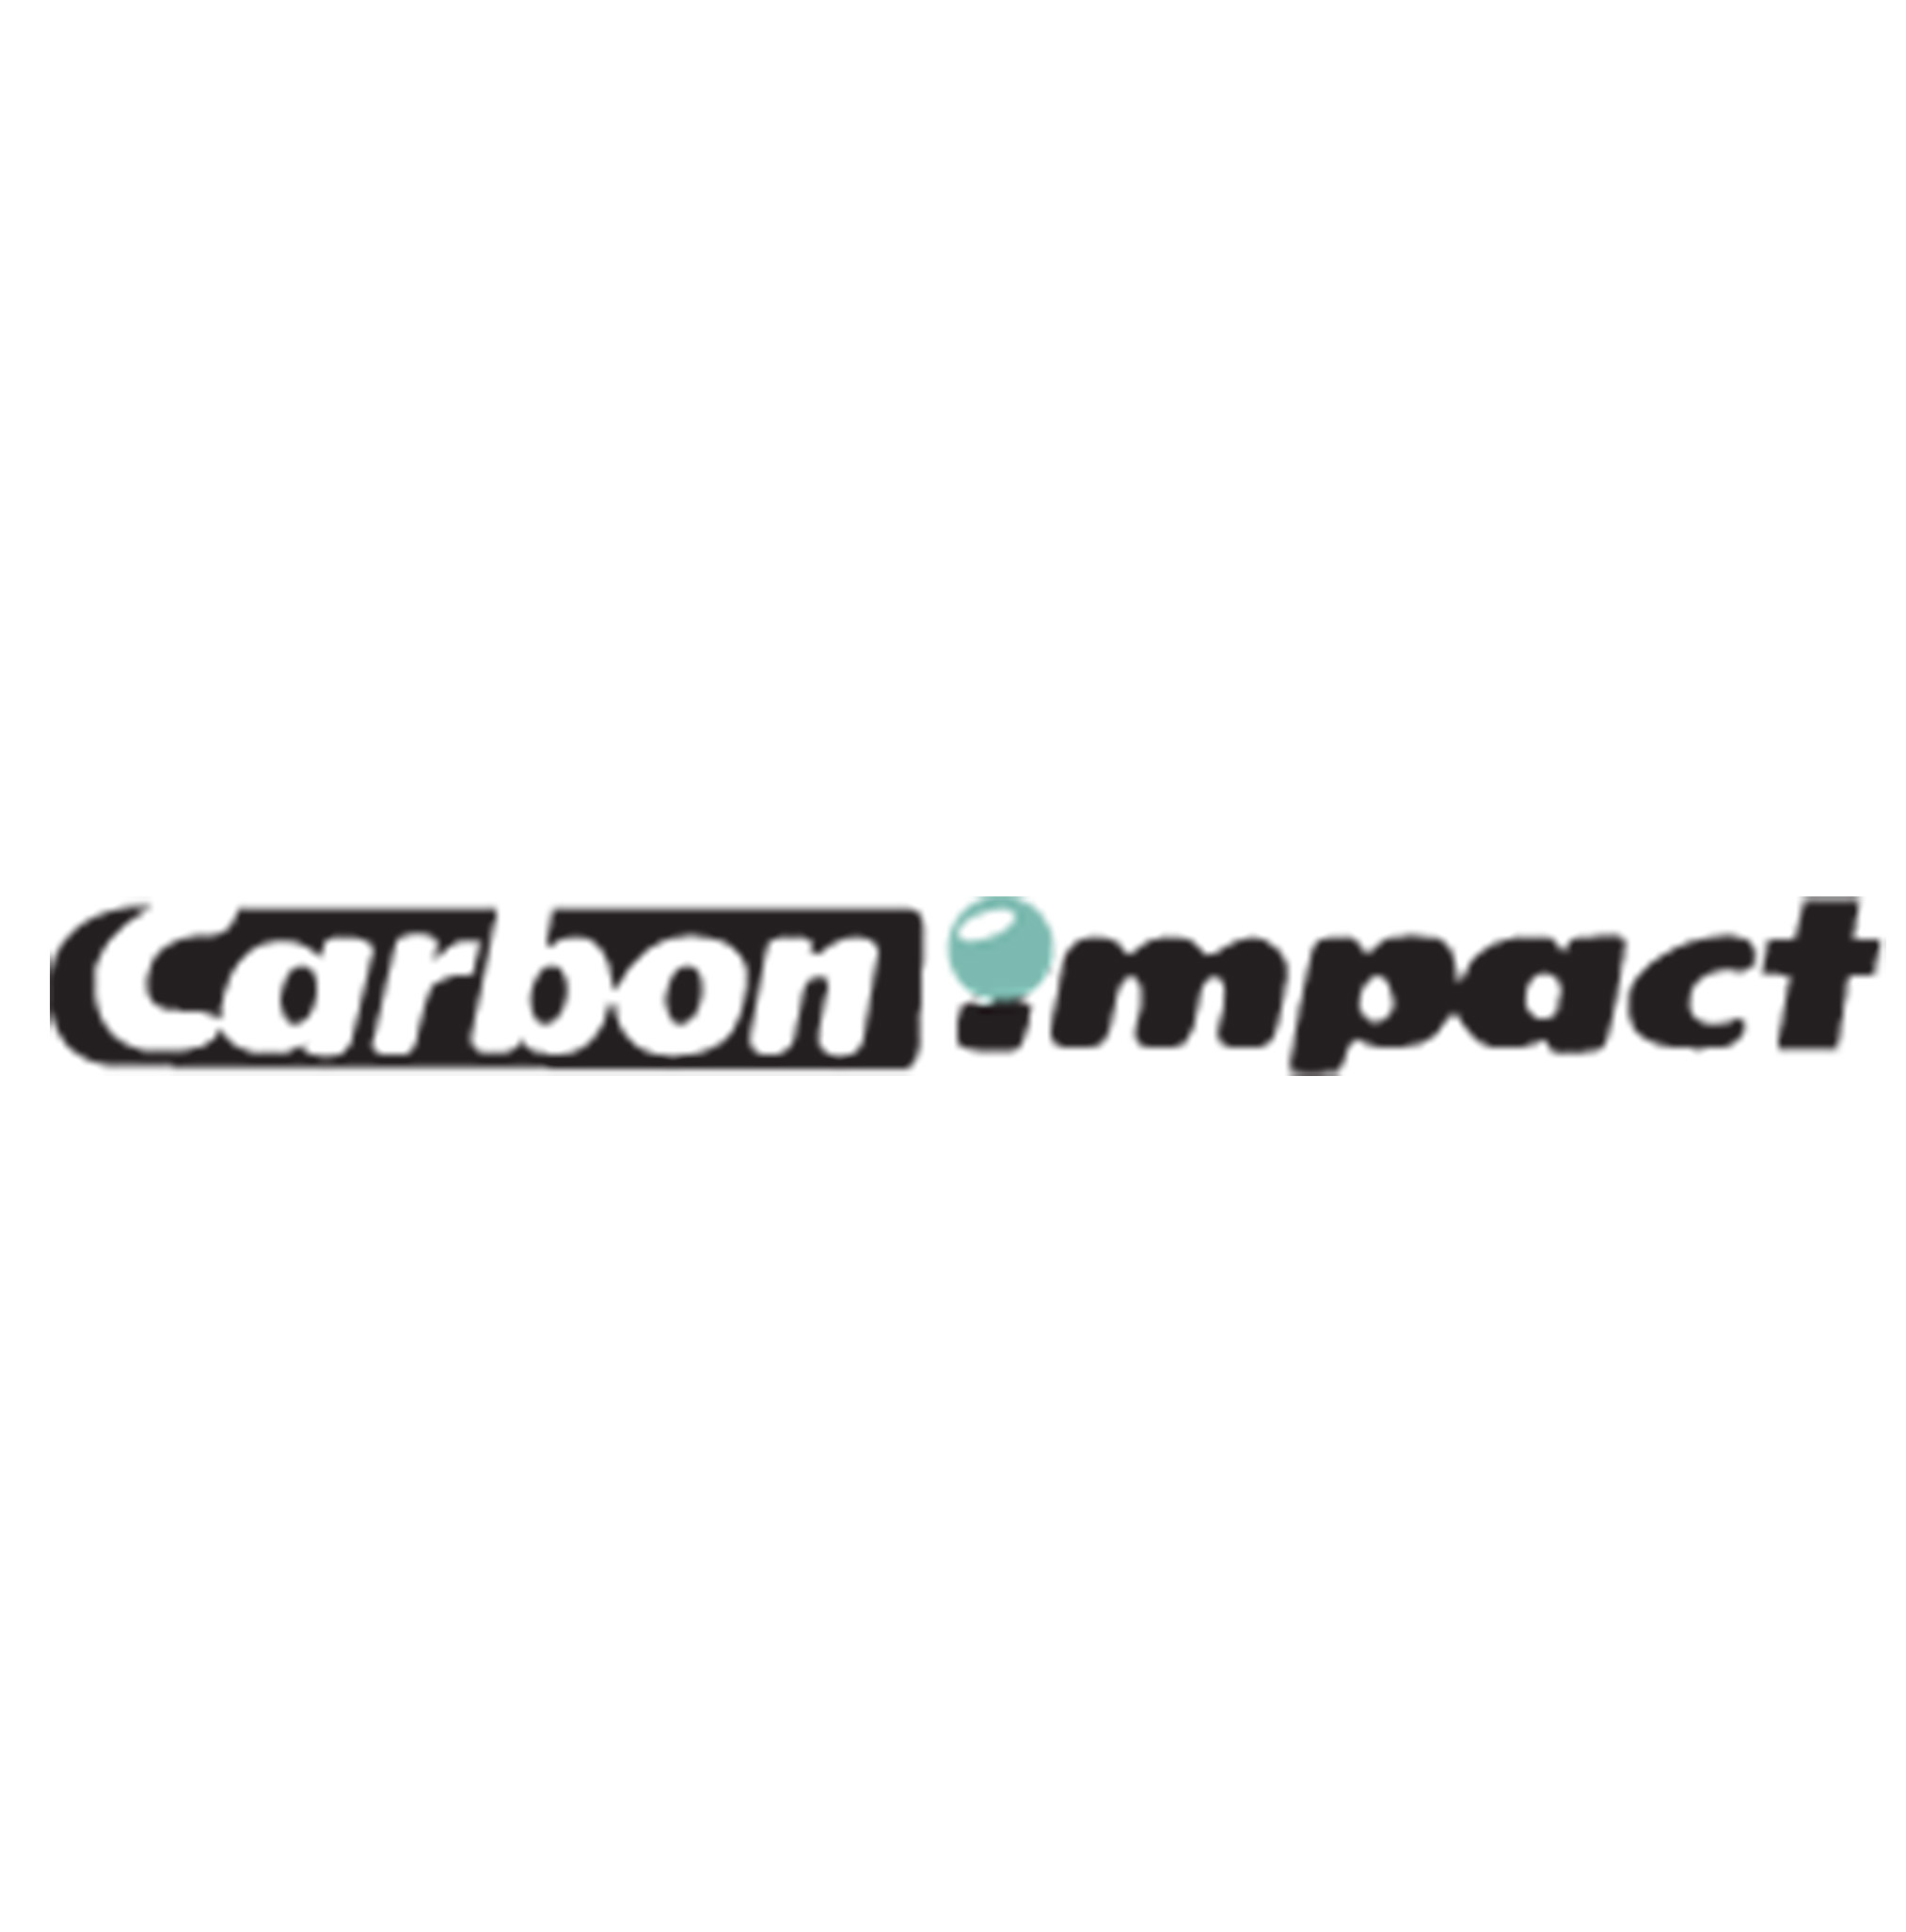 955-Carbon Impact